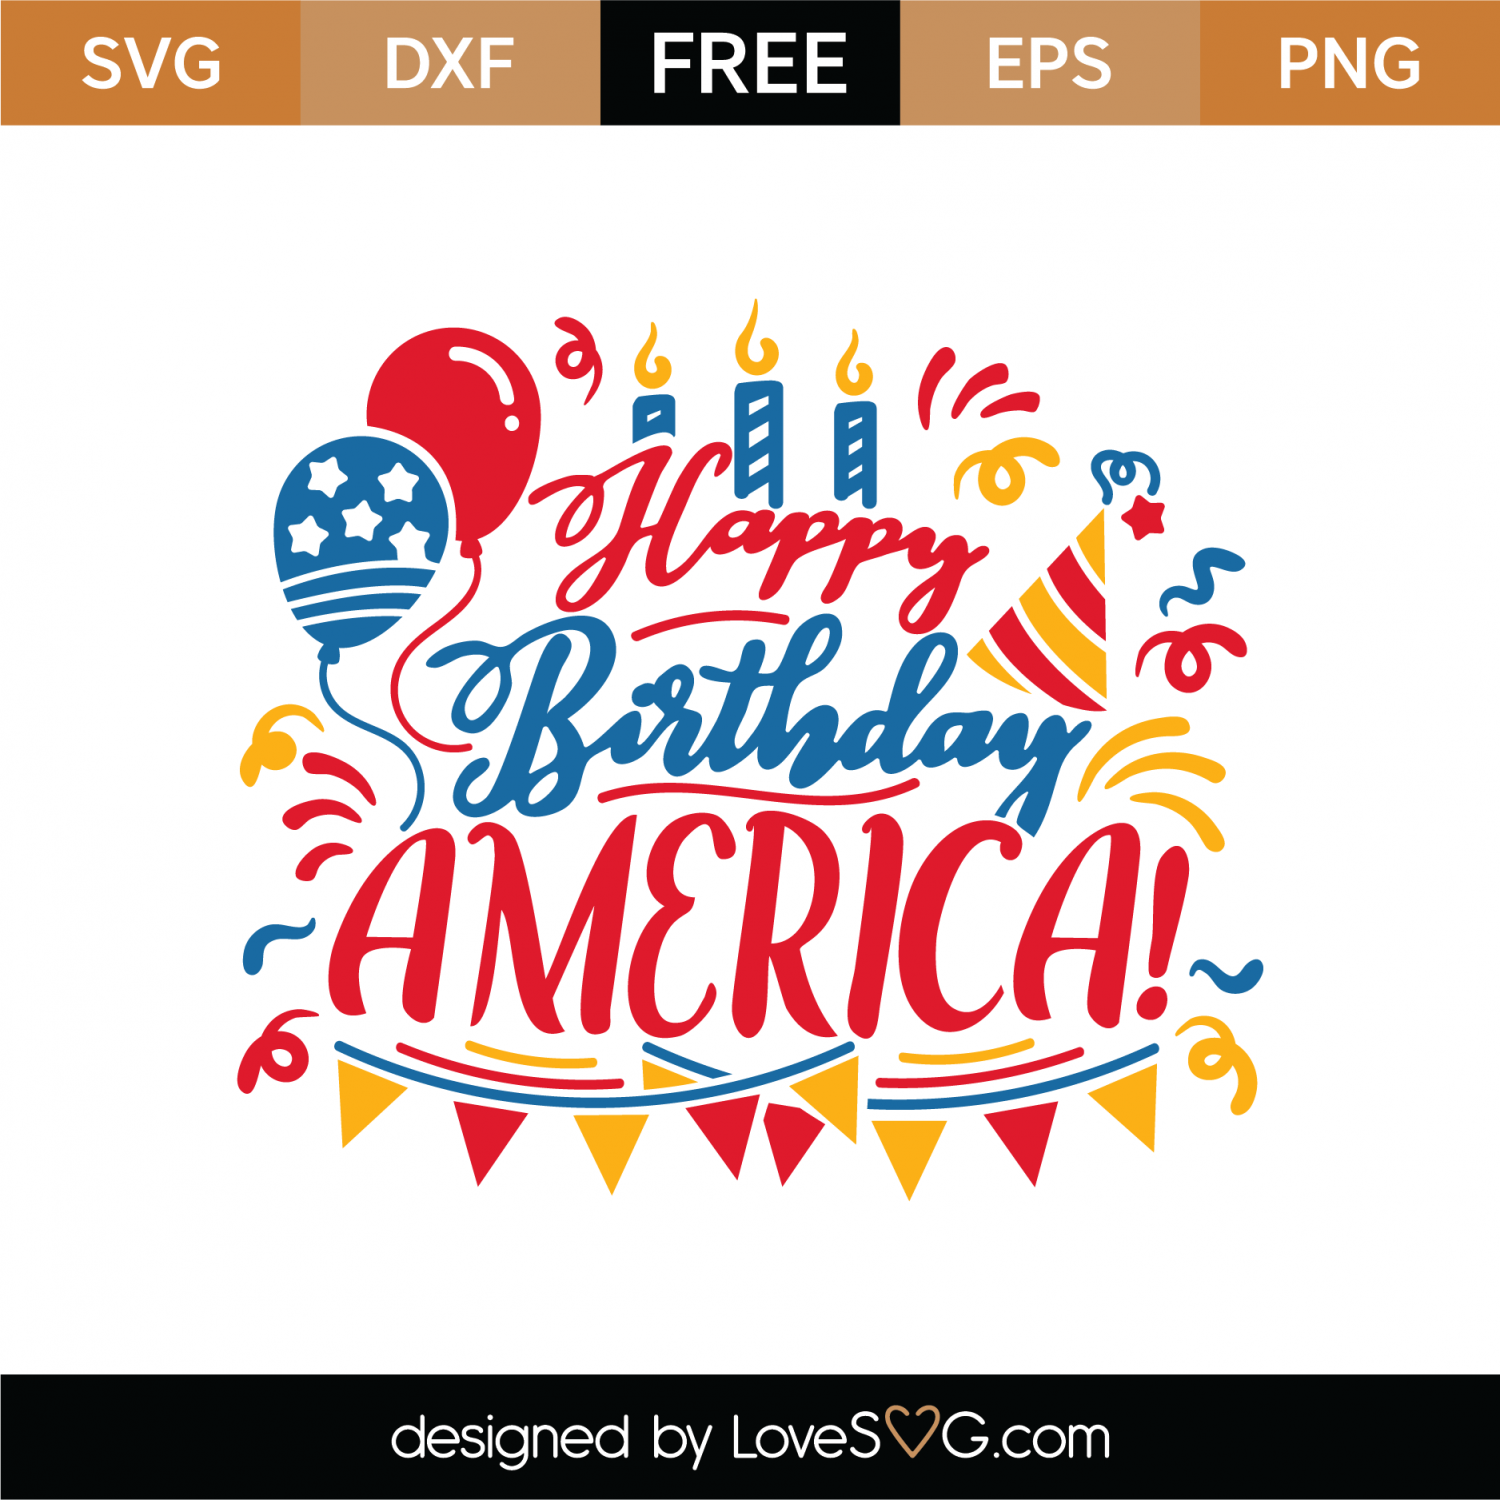 Free Happy Birthday America SVG Cut File | Lovesvg.com